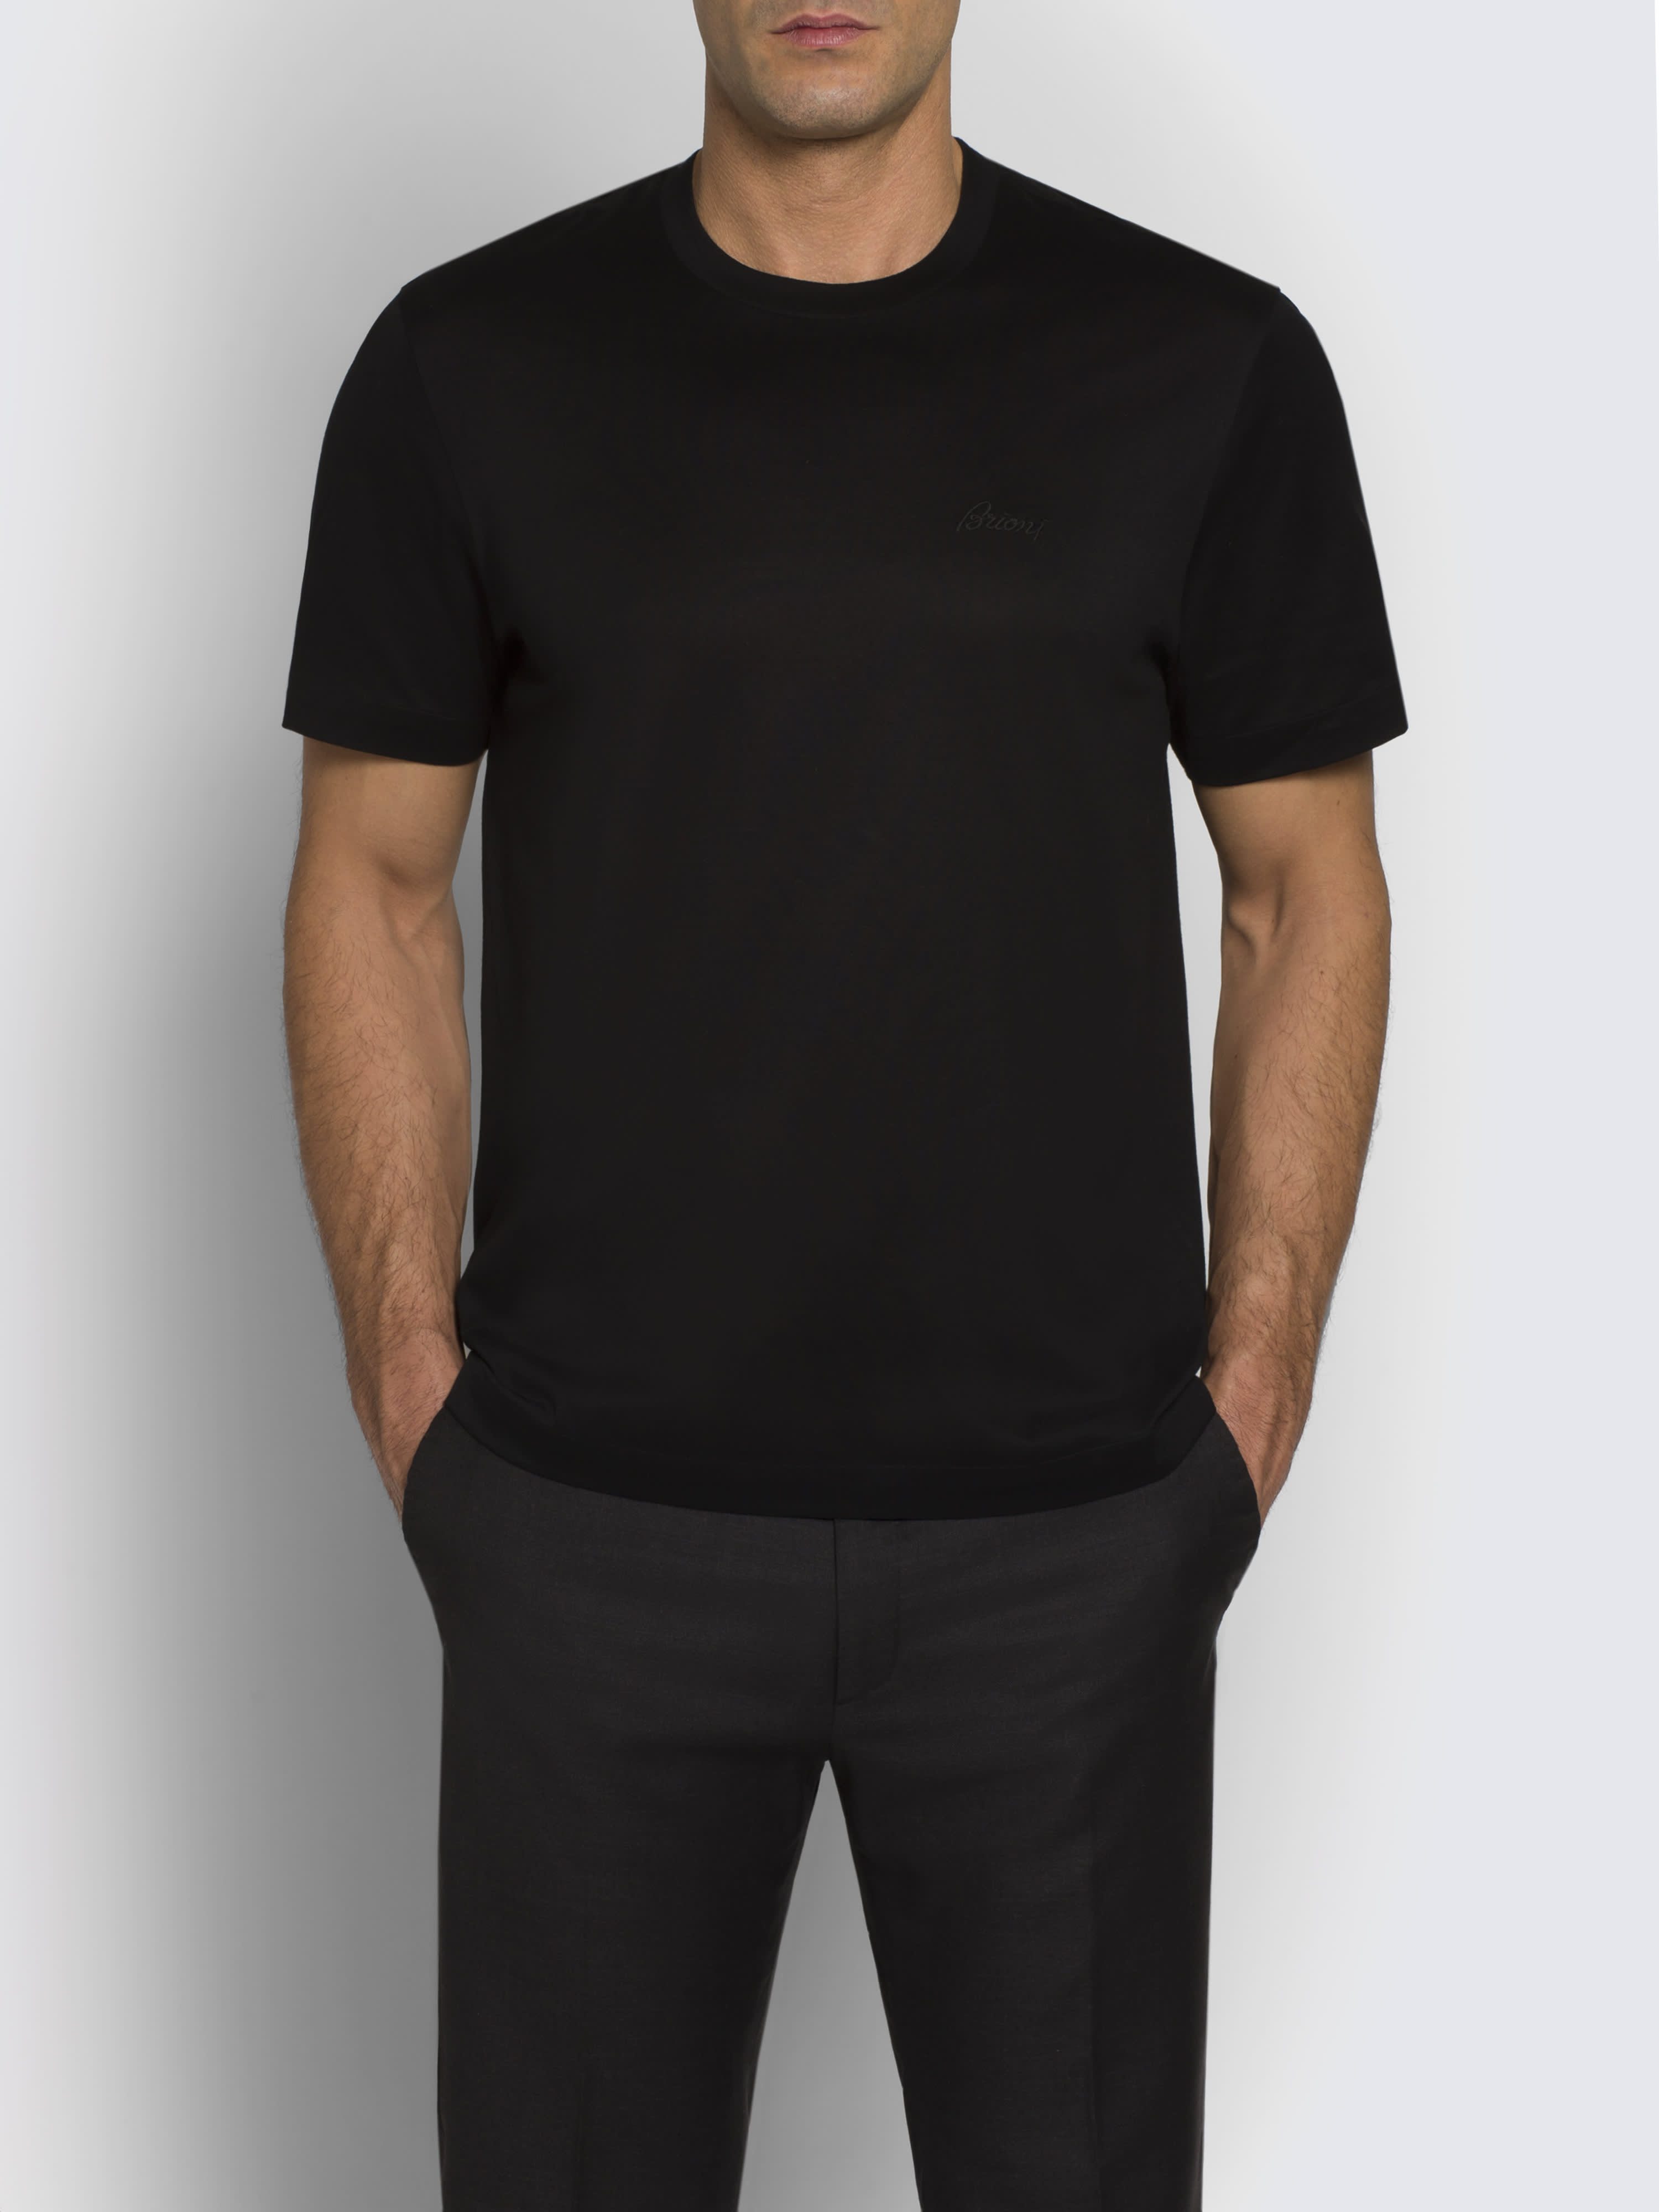 Modaty - Izor Cotton Slip On Comfy Hooded T-Shirt - Black